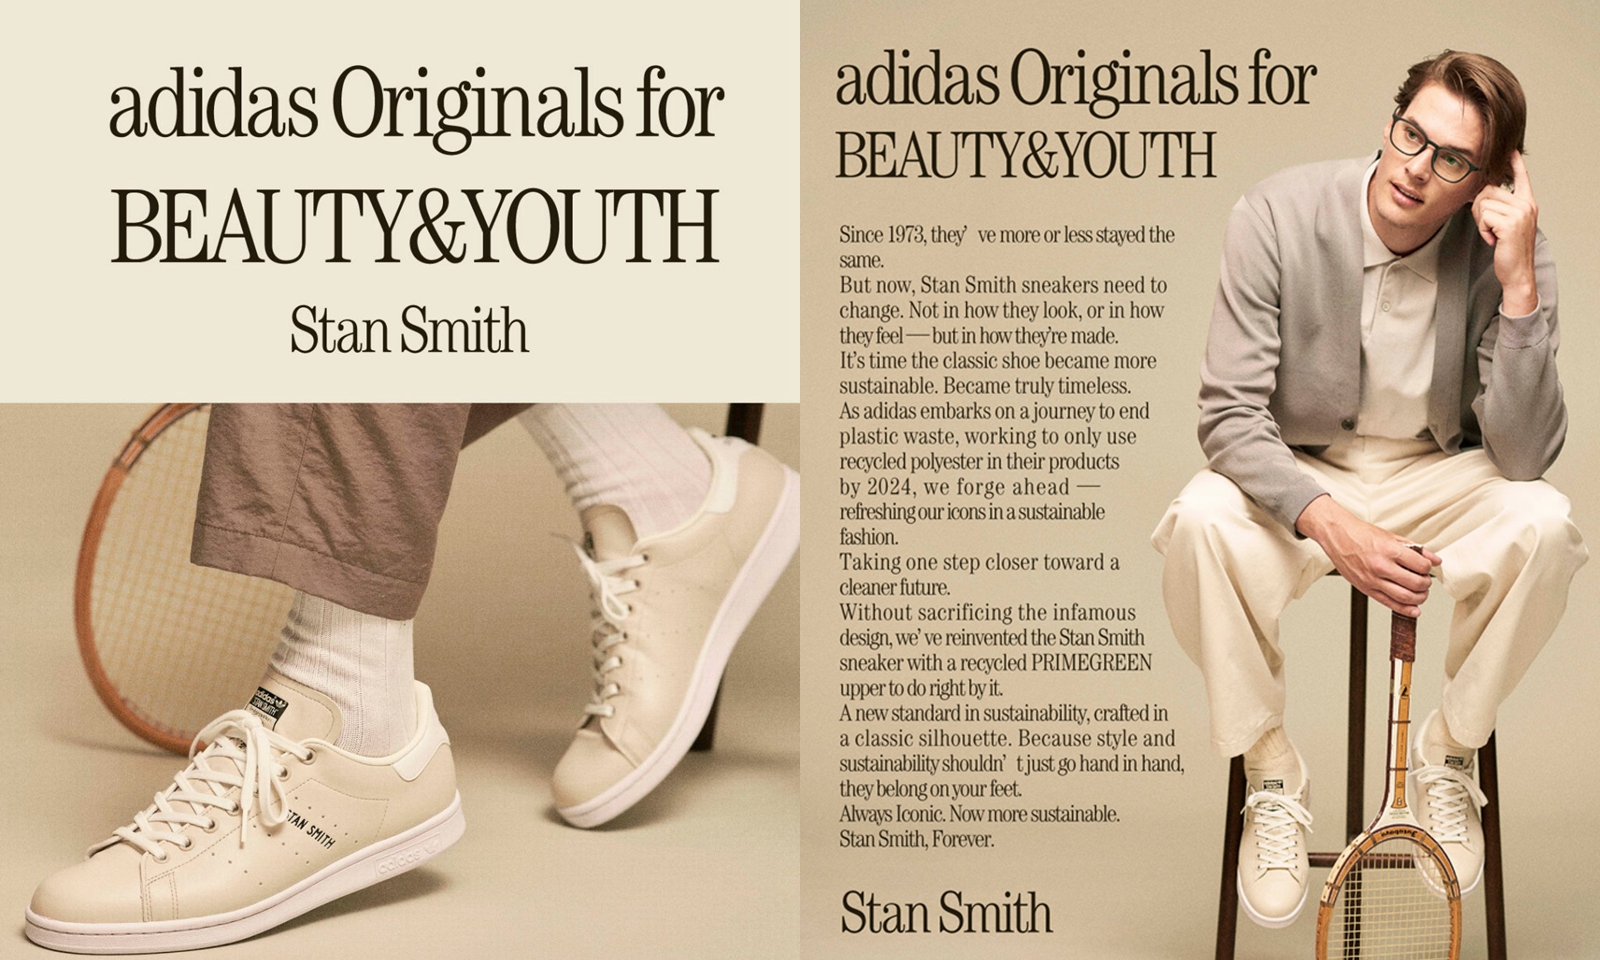 BEAUTY & YOUTH x adidas Originals 全新合作系列公开亮相